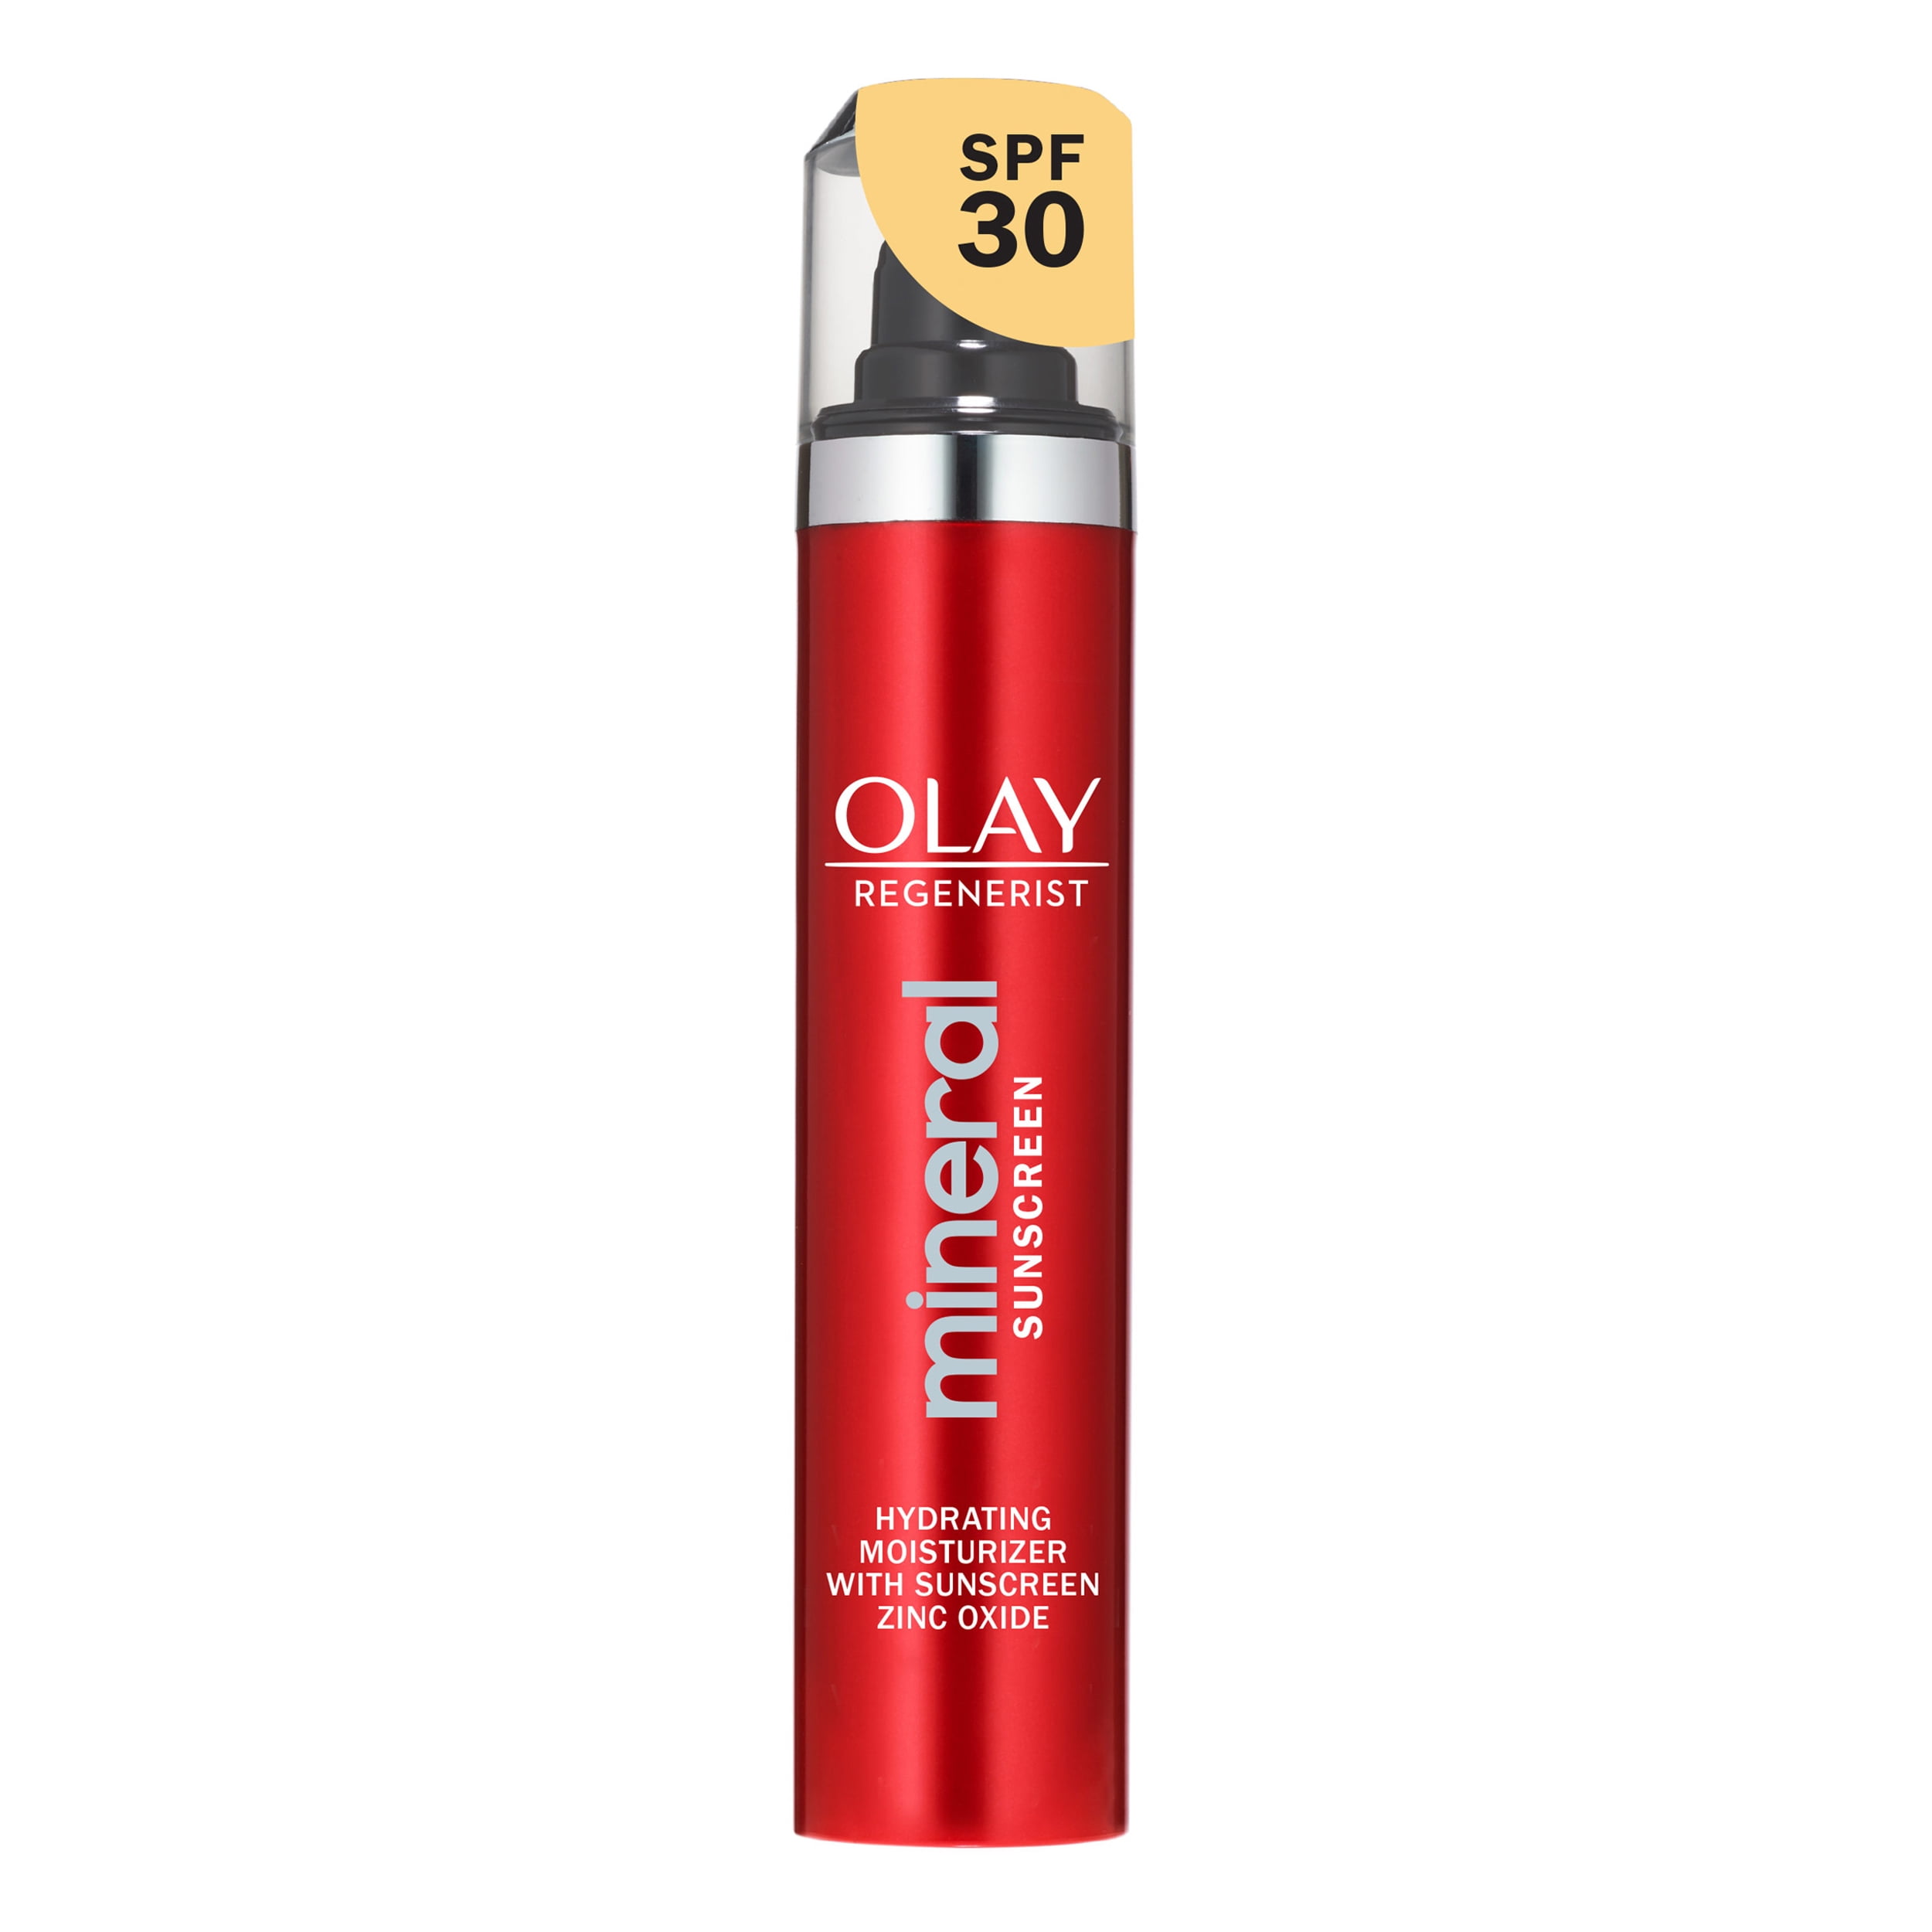 Olay Regenerist Mineral Sunscreen Face Moisturizer, Zinc Oxide, SPF 30 ...